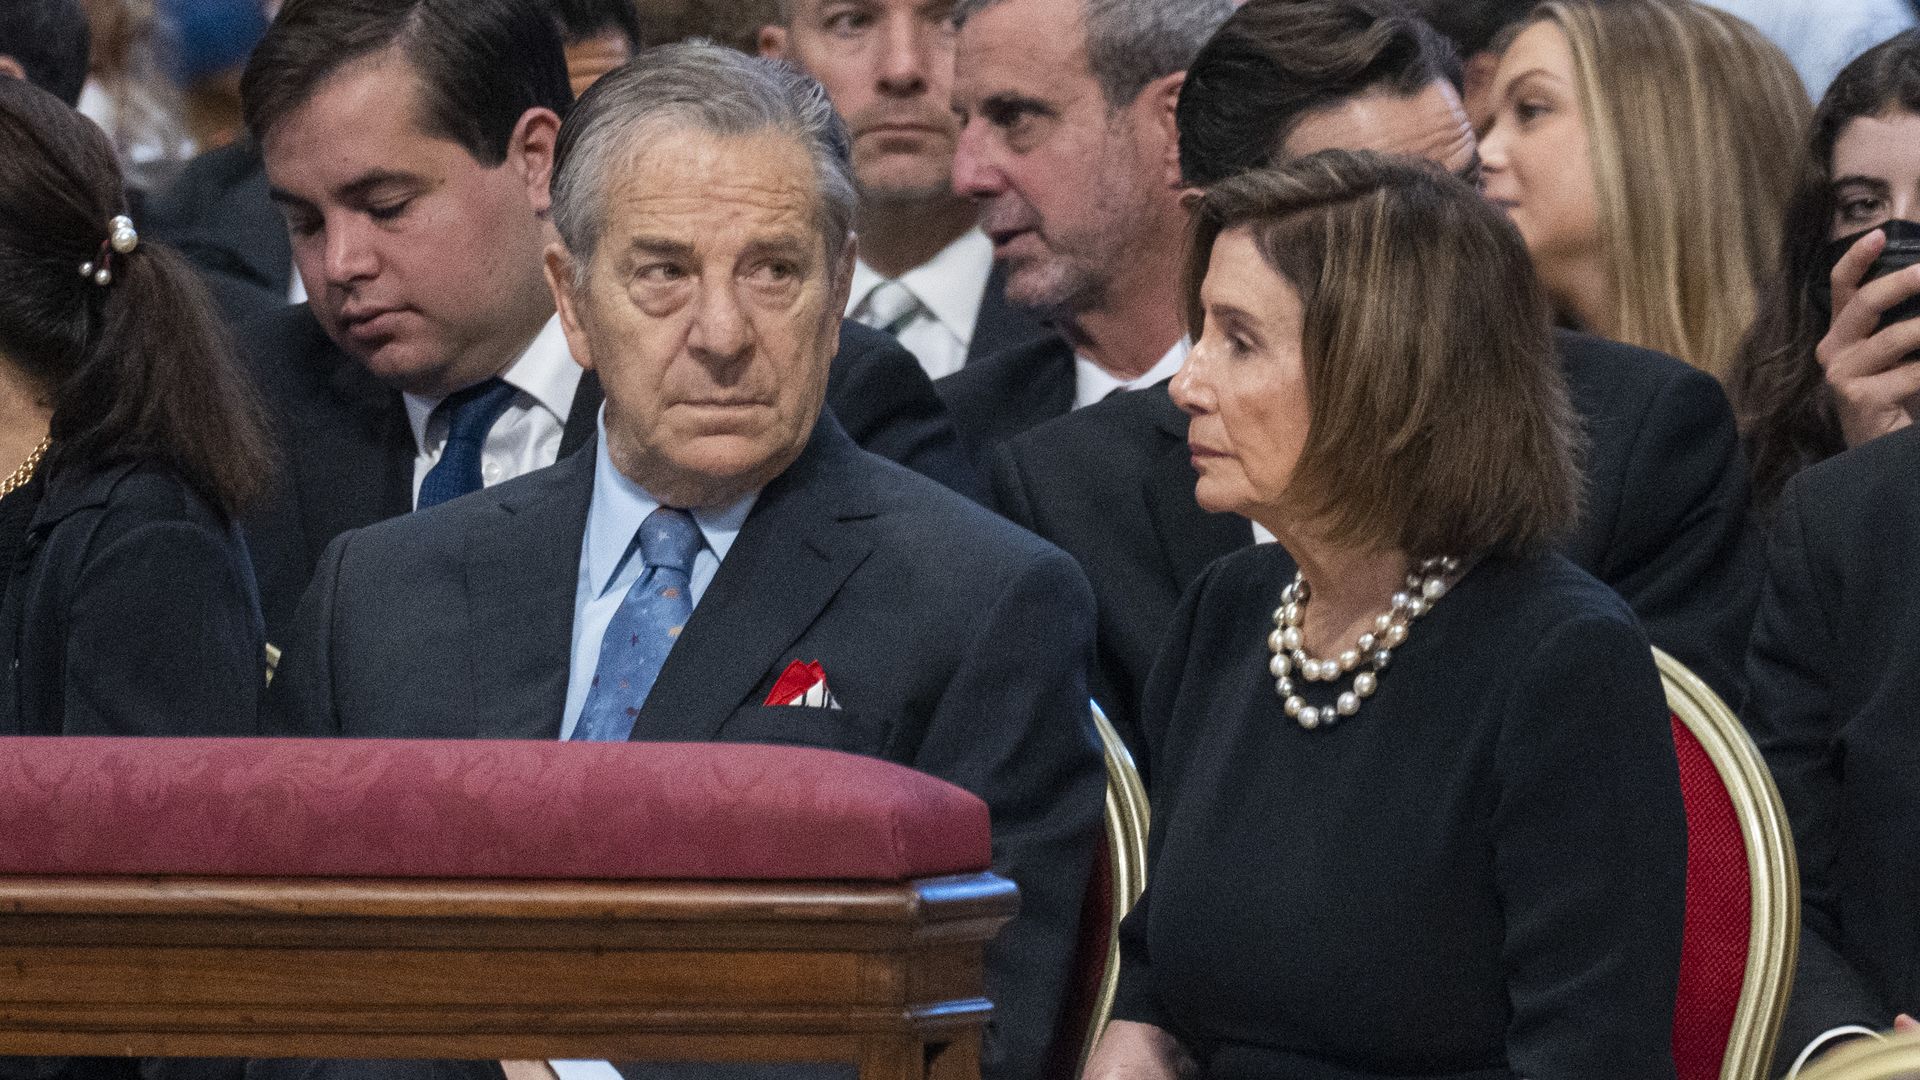 Paul and Nancy Pelosi